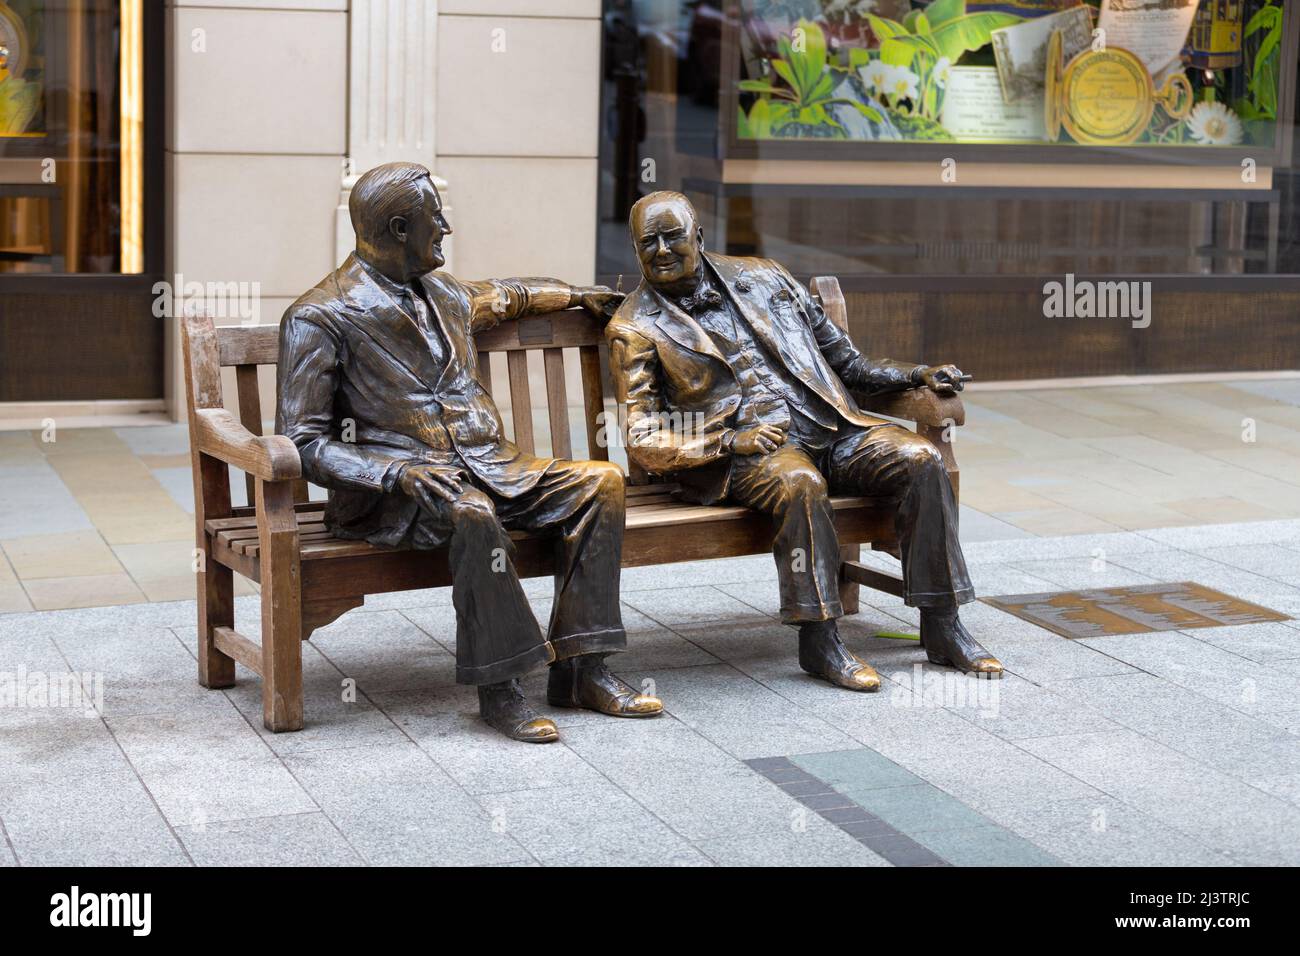 Winston Churchill And Franklin D Roosevelt Allies statue Sculpture, bond street, london, uk Stock Photo